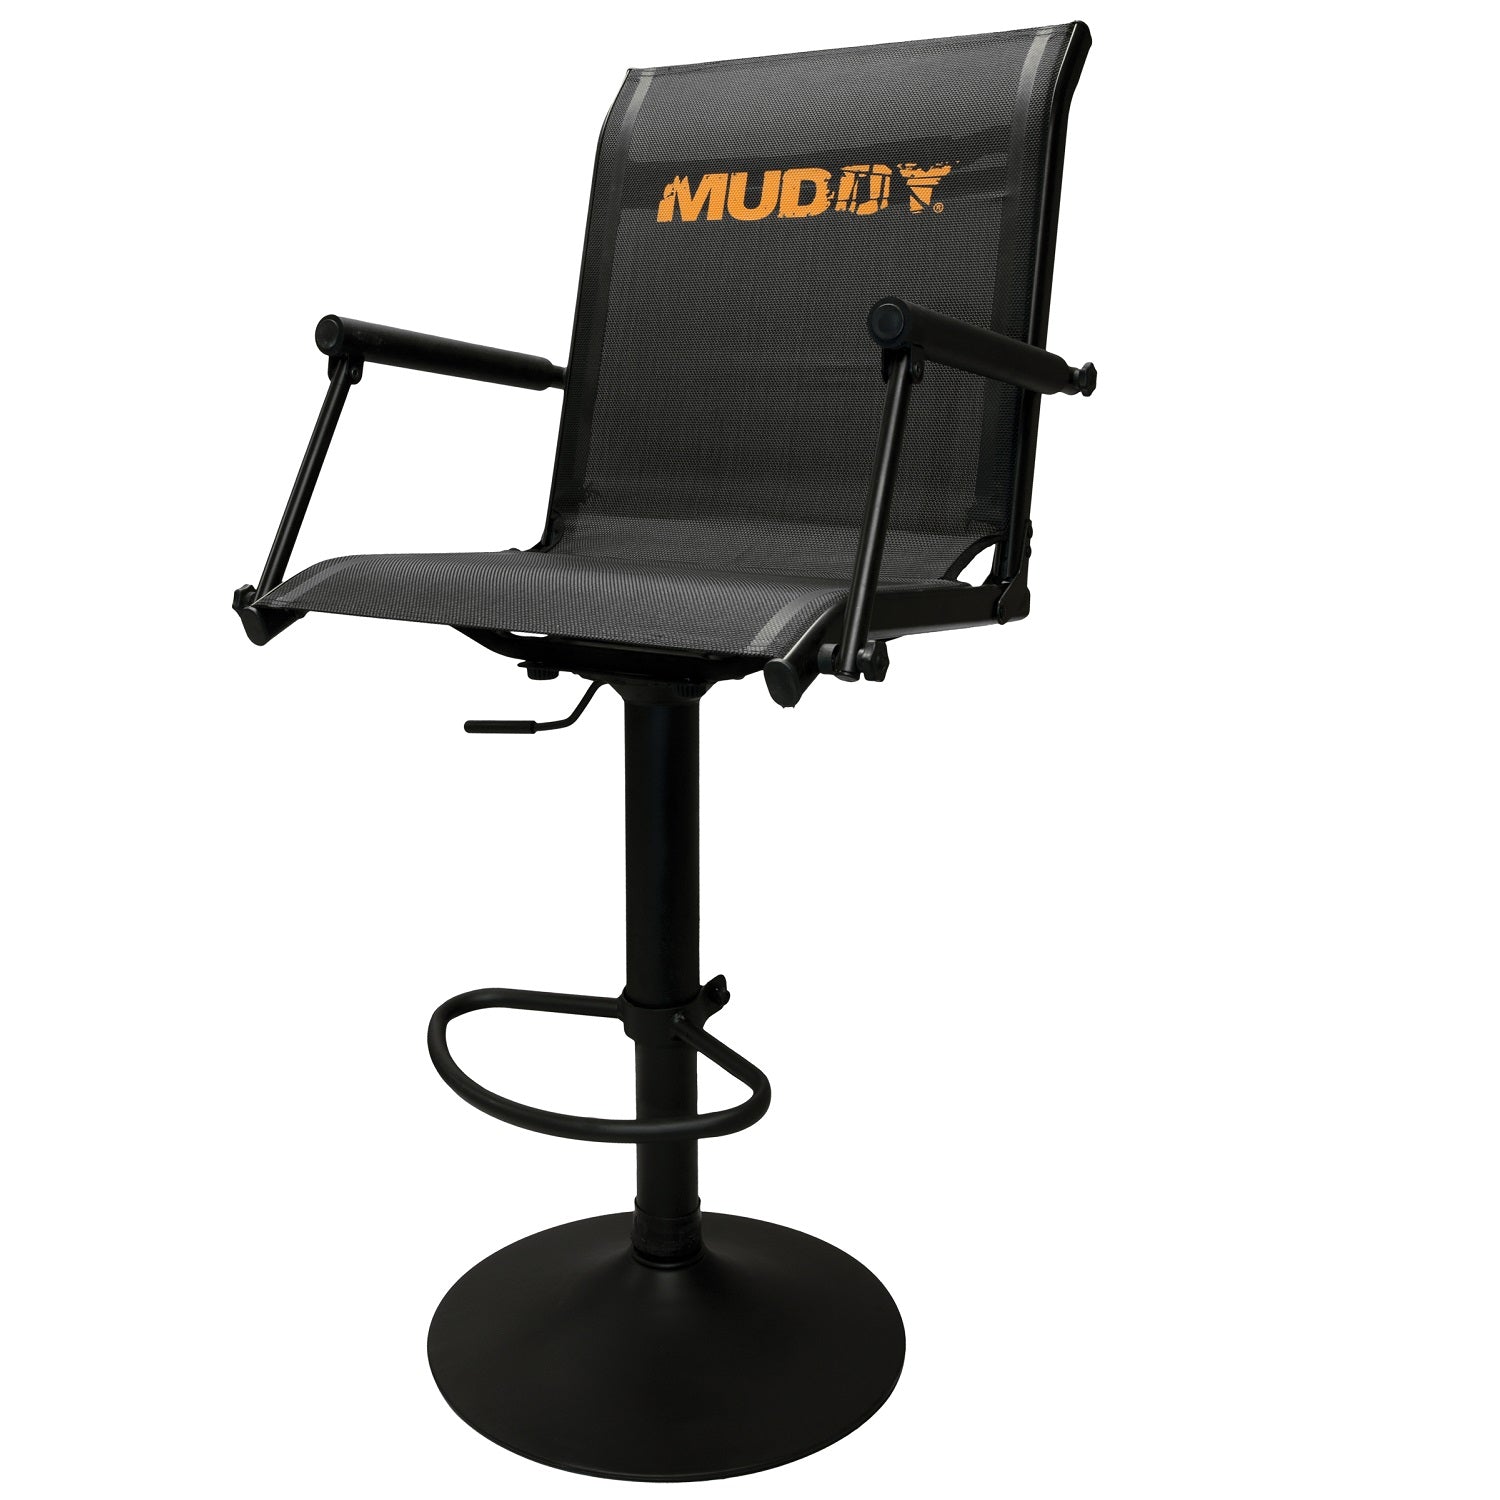 Muddy Swivel-Ease Xtreme Chair